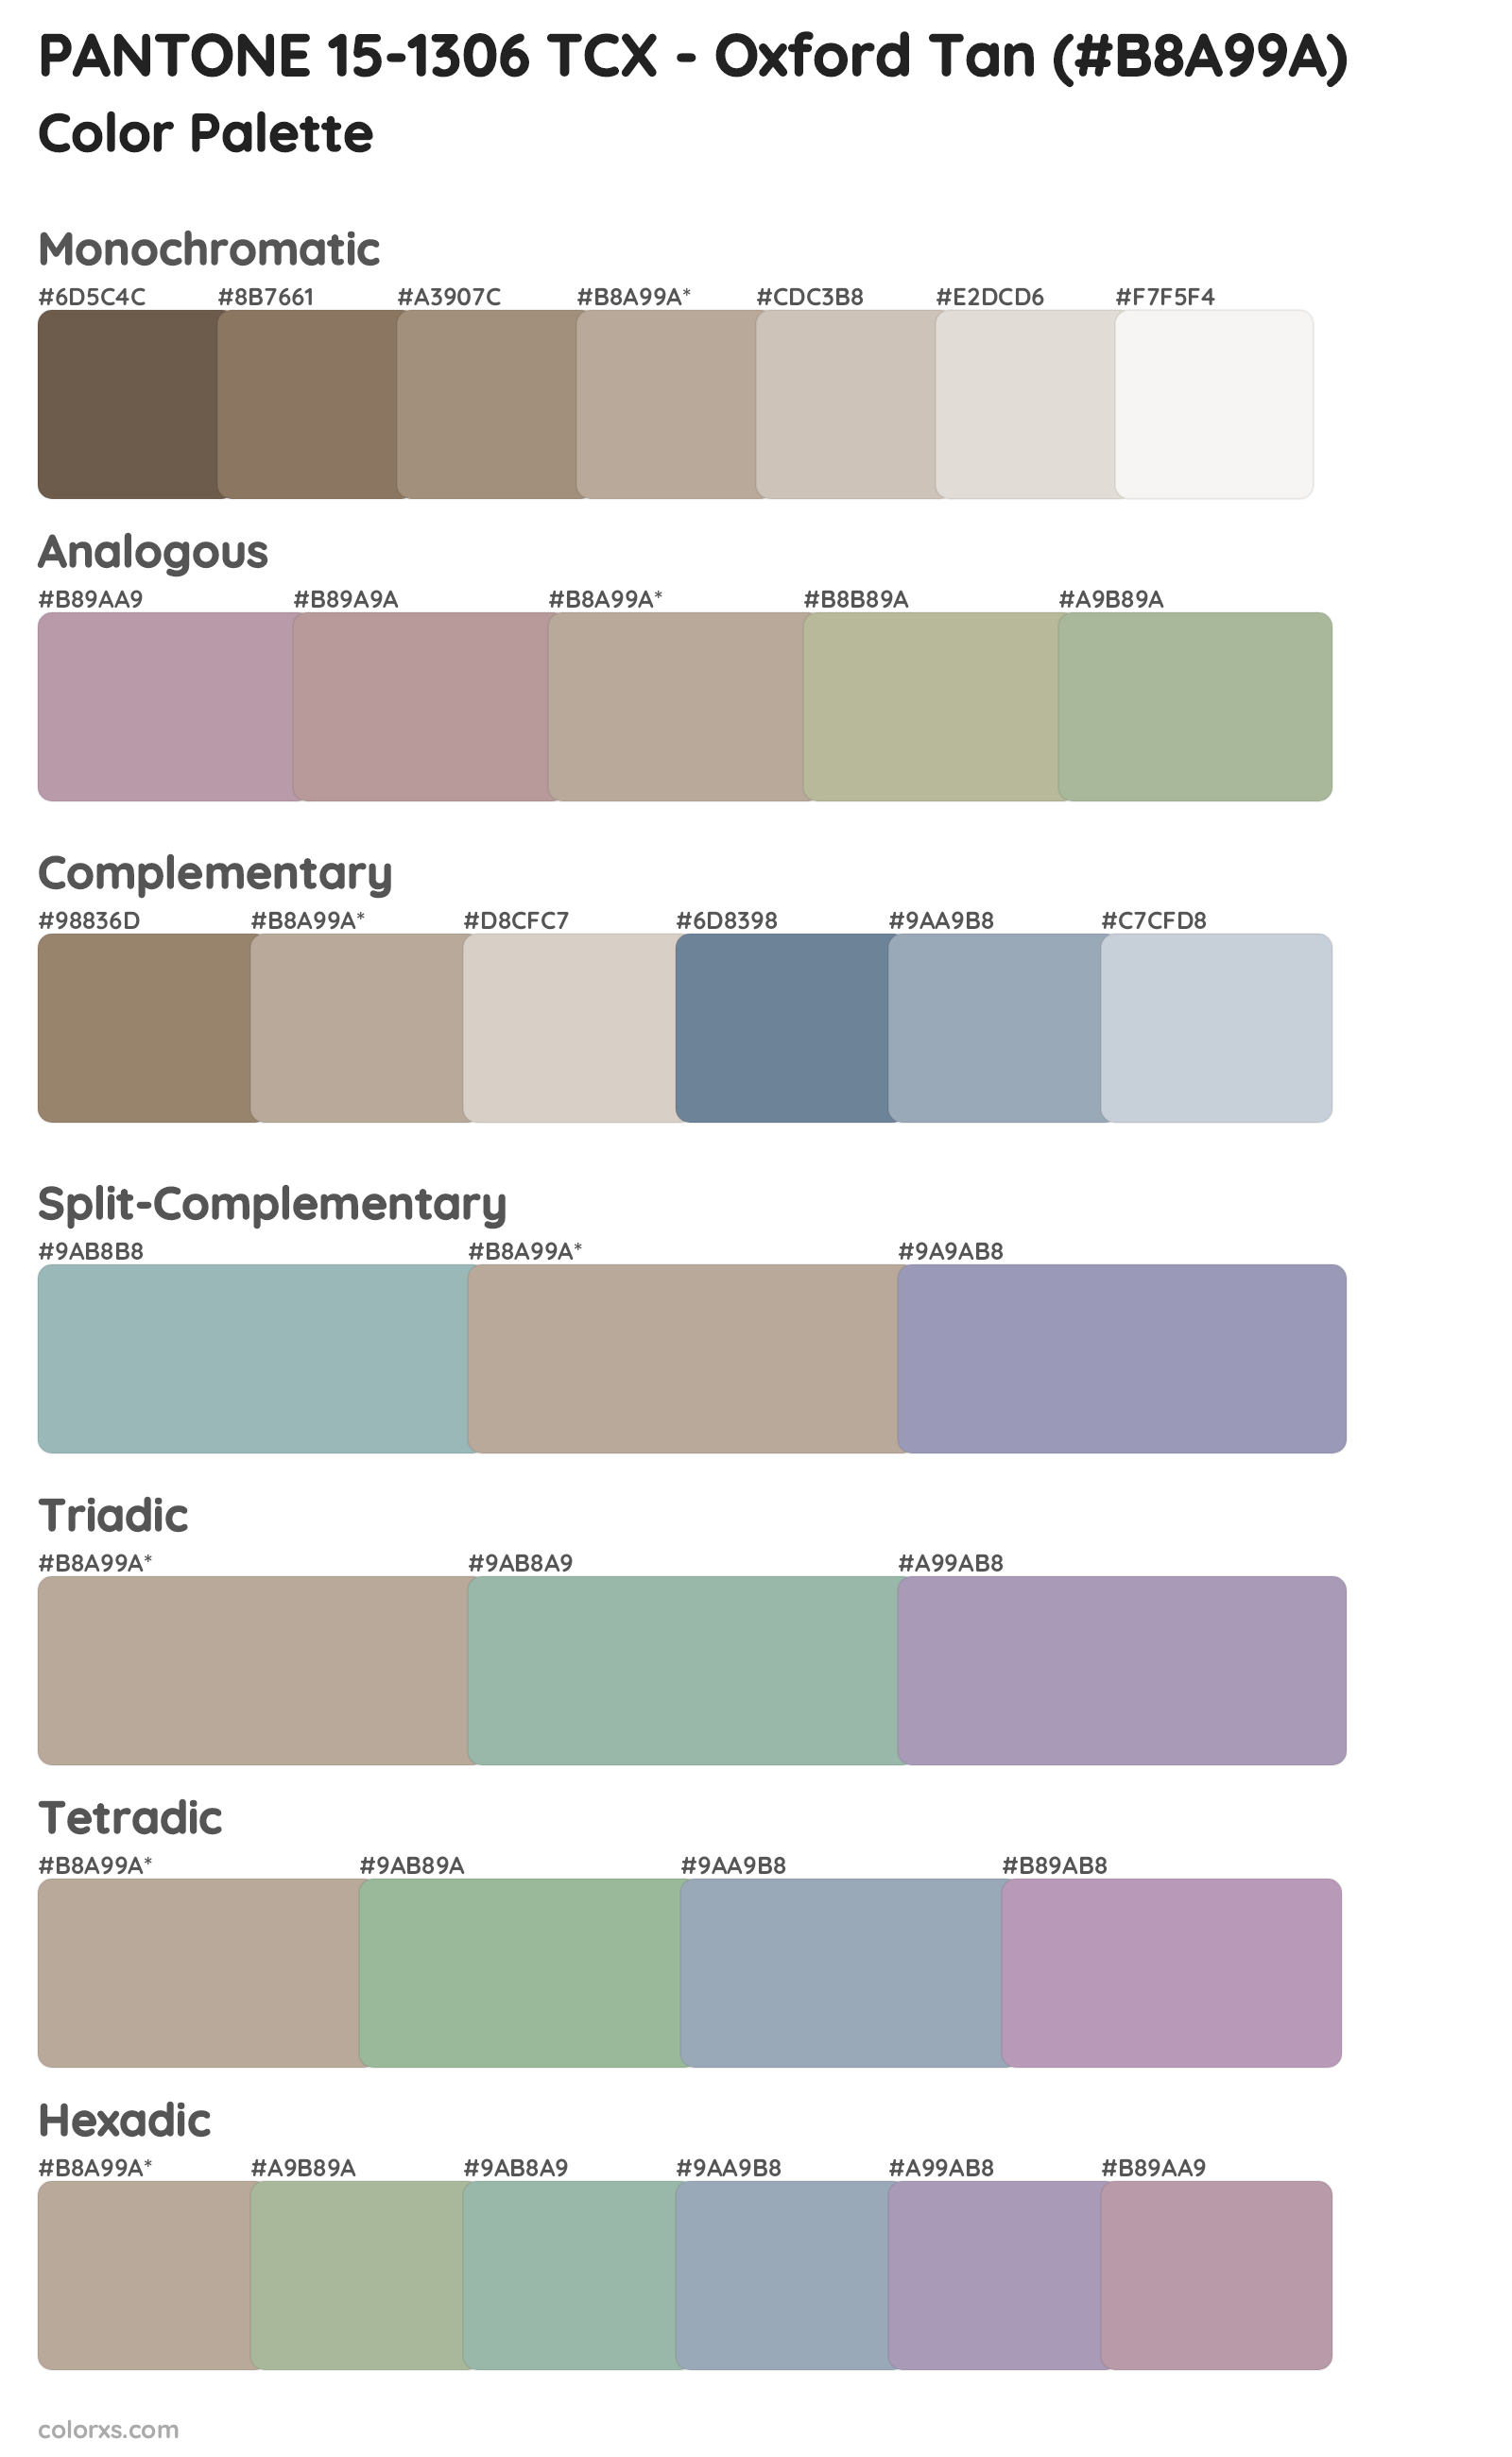 PANTONE 15-1306 TCX - Oxford Tan Color Scheme Palettes